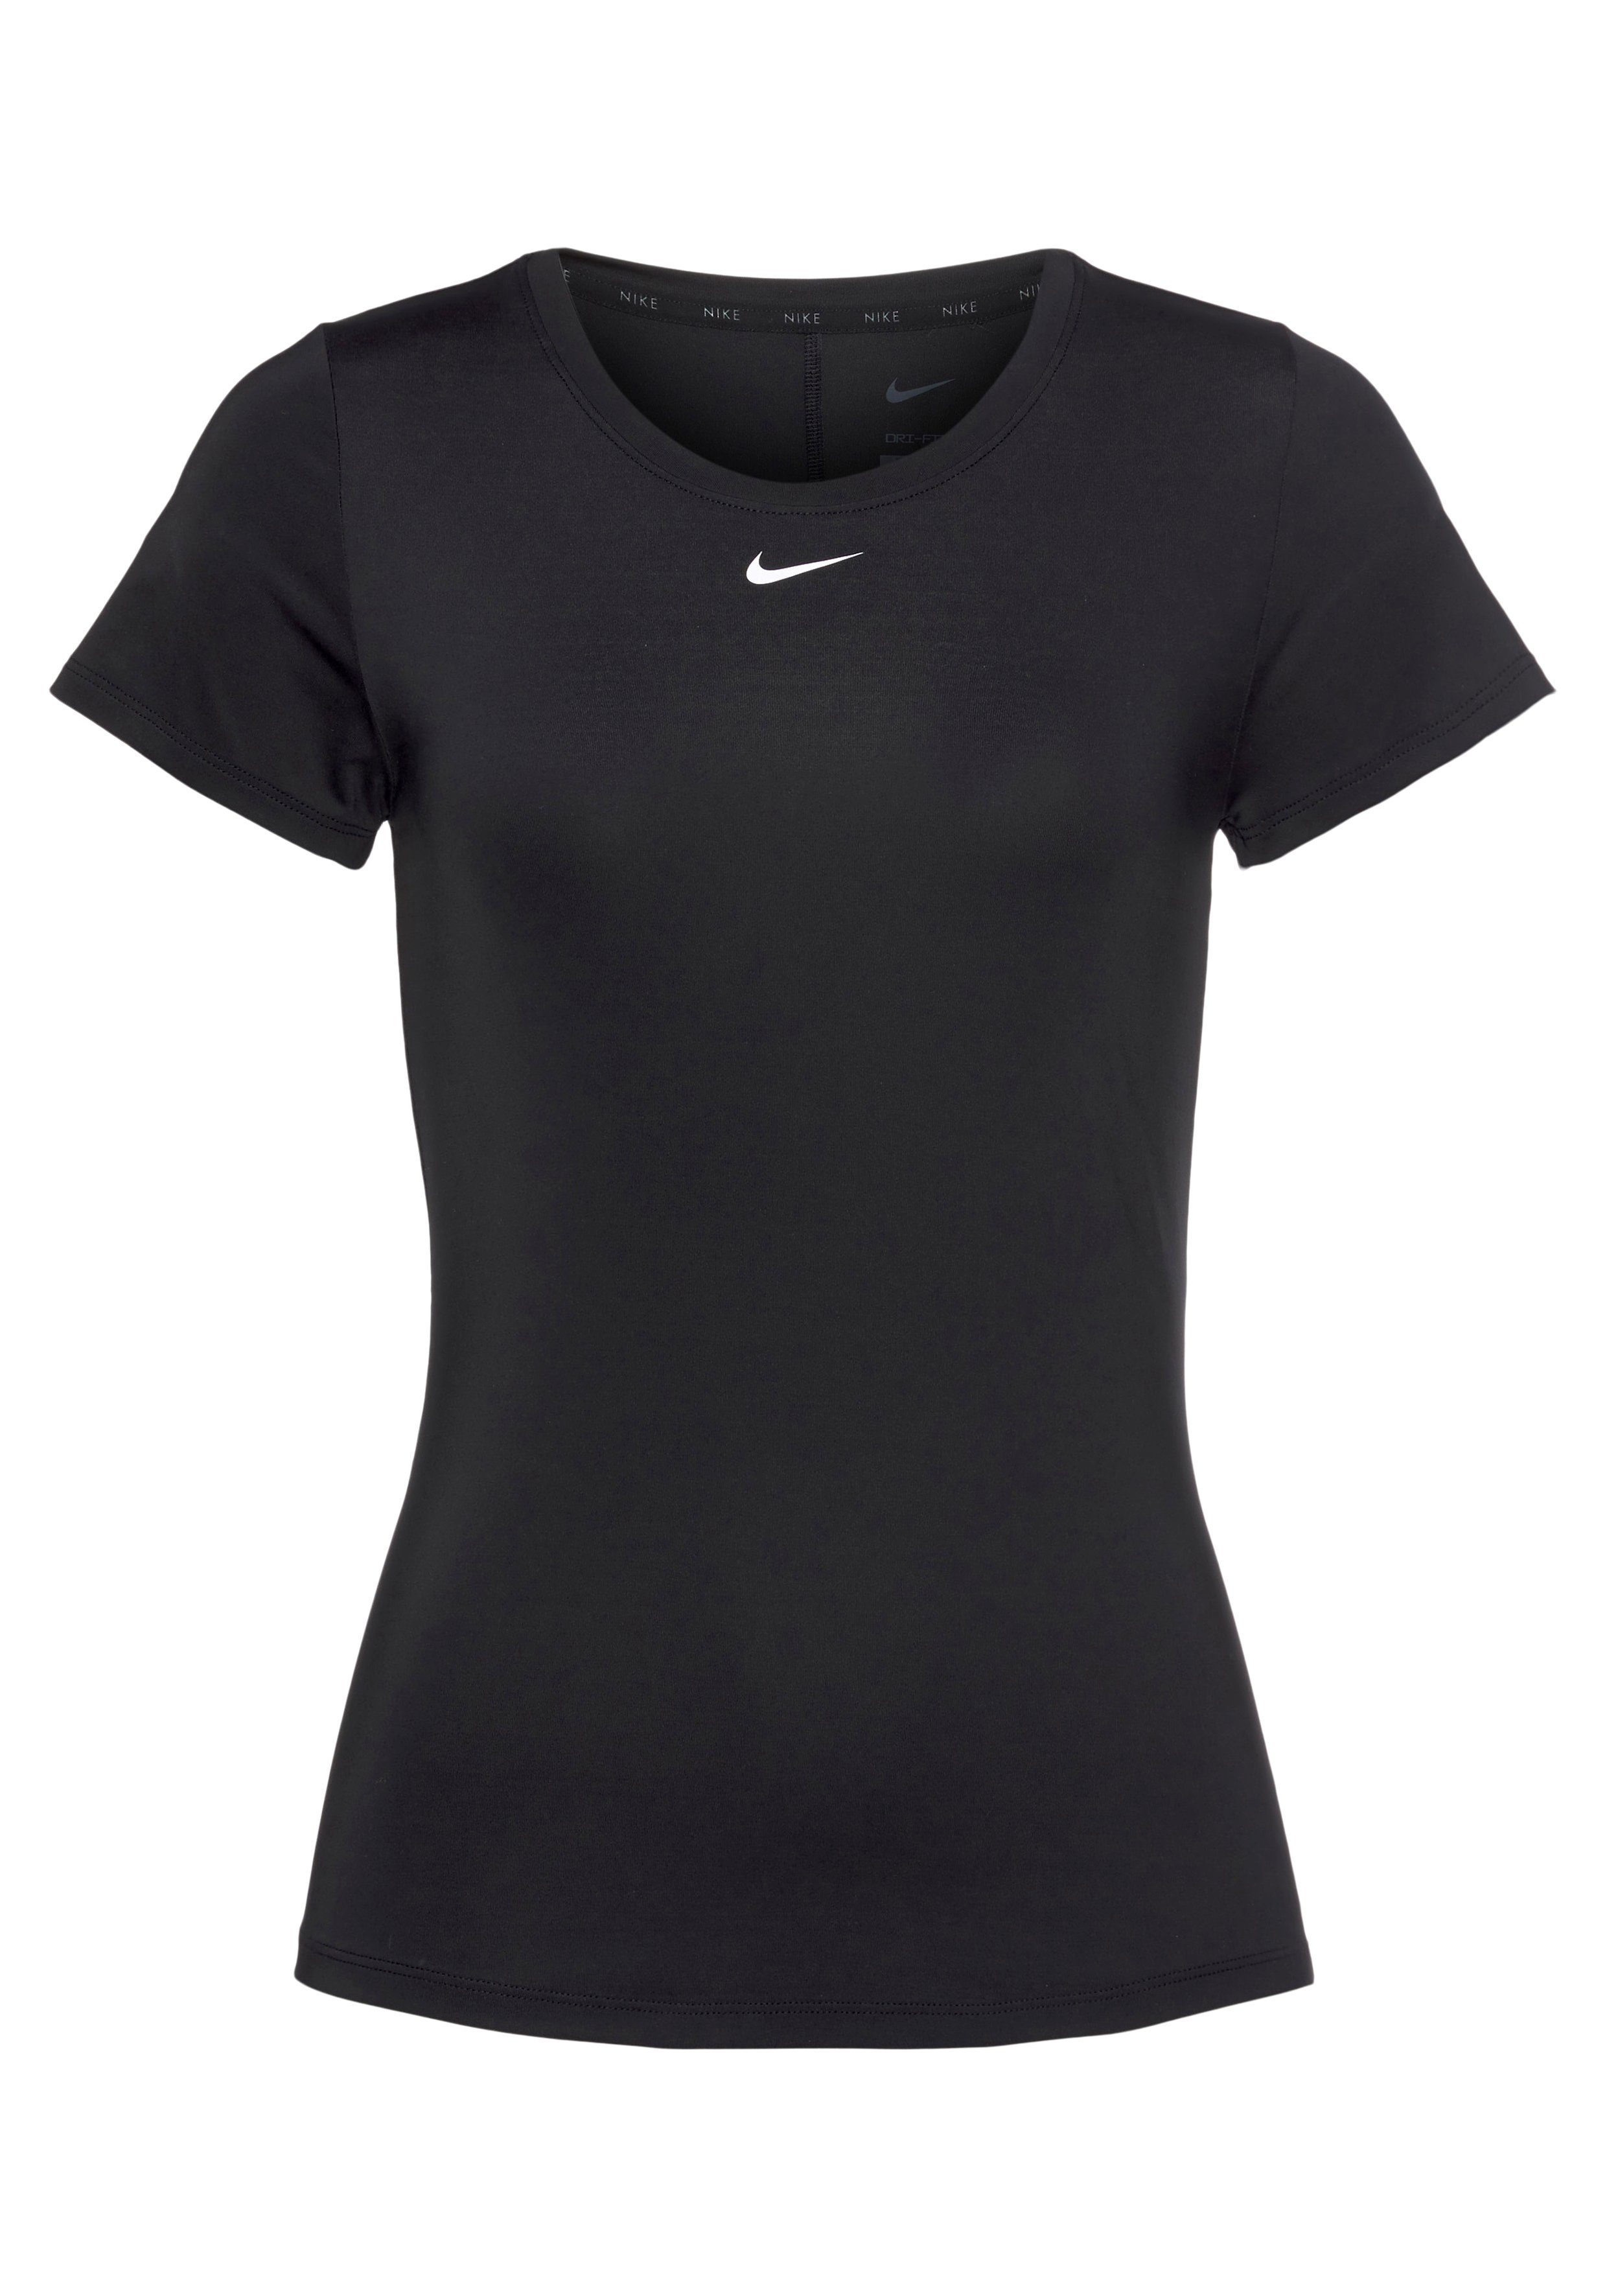 Nike Trainingsshirt DRI-FIT WOMEN'S SHORT-SLEEVE schwarz TOP FIT ONE SLIM